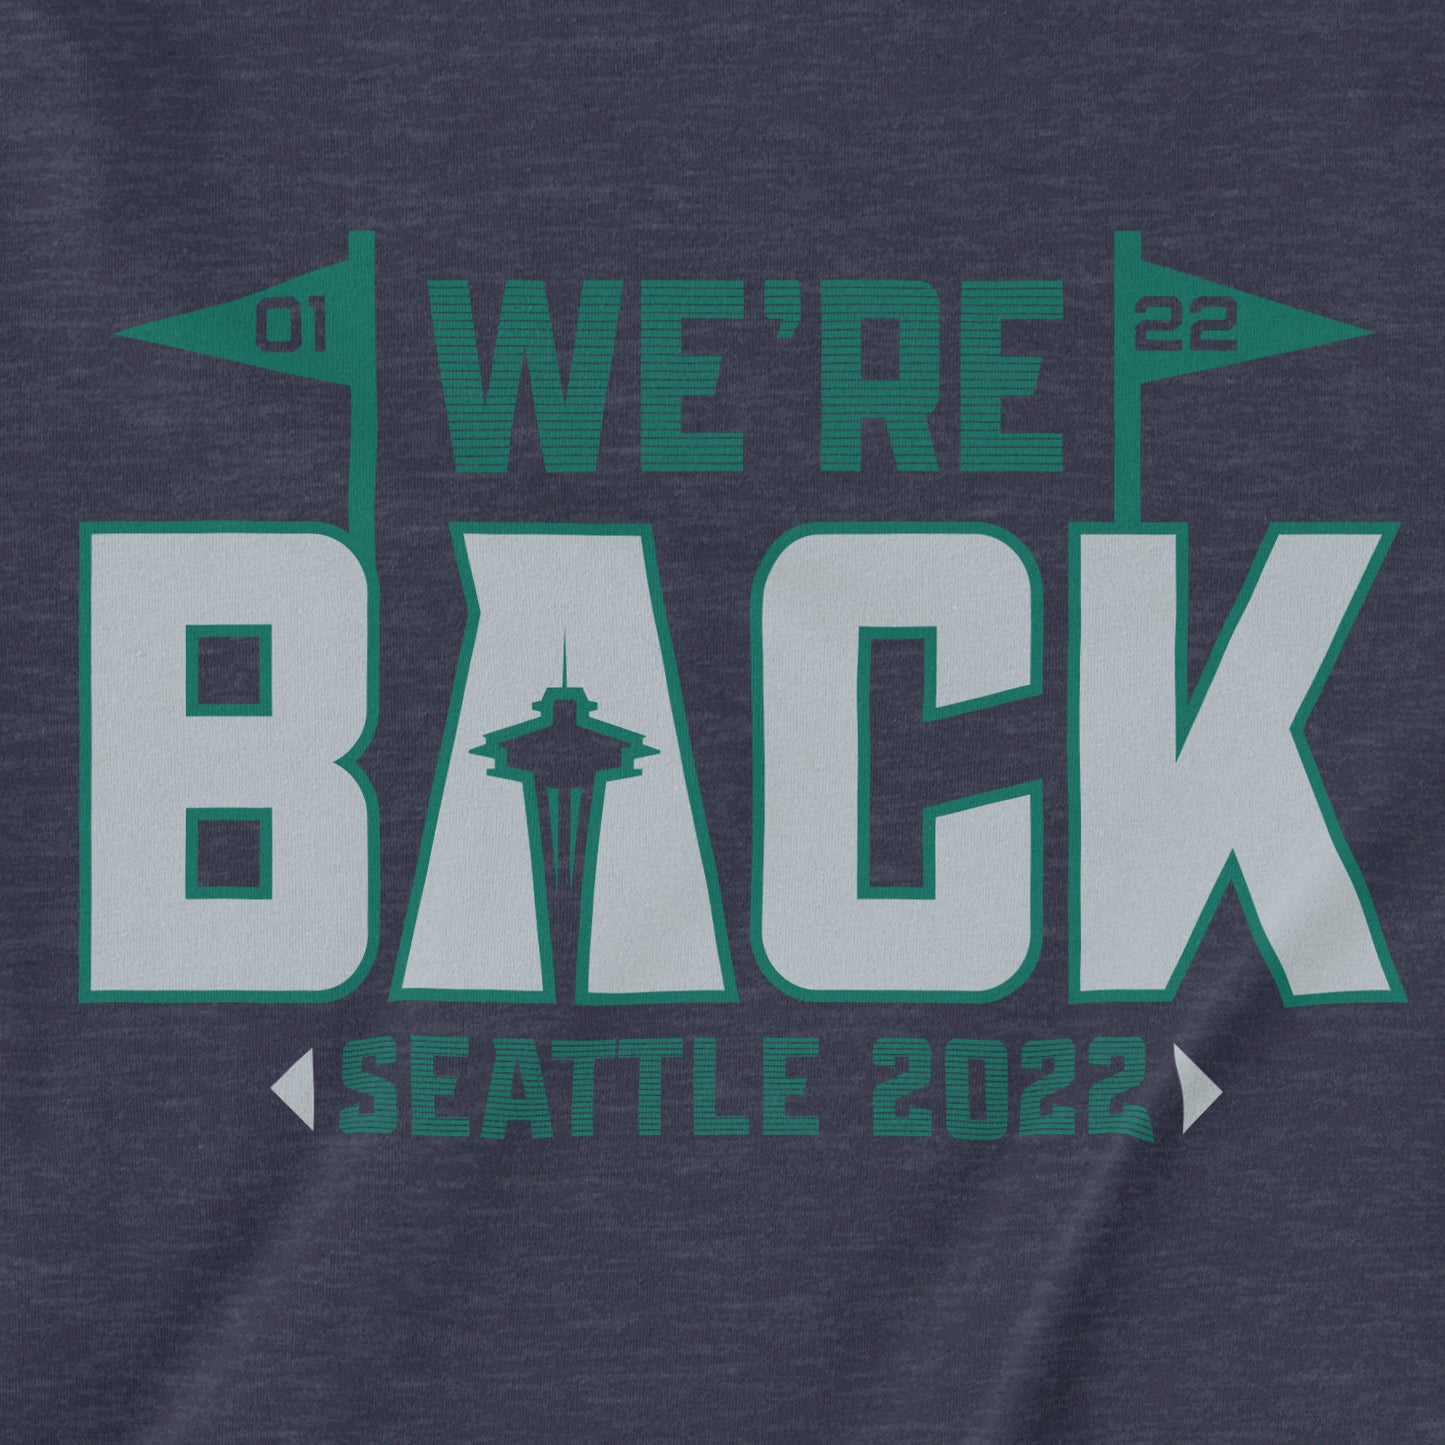 We're Back | T-Shirt